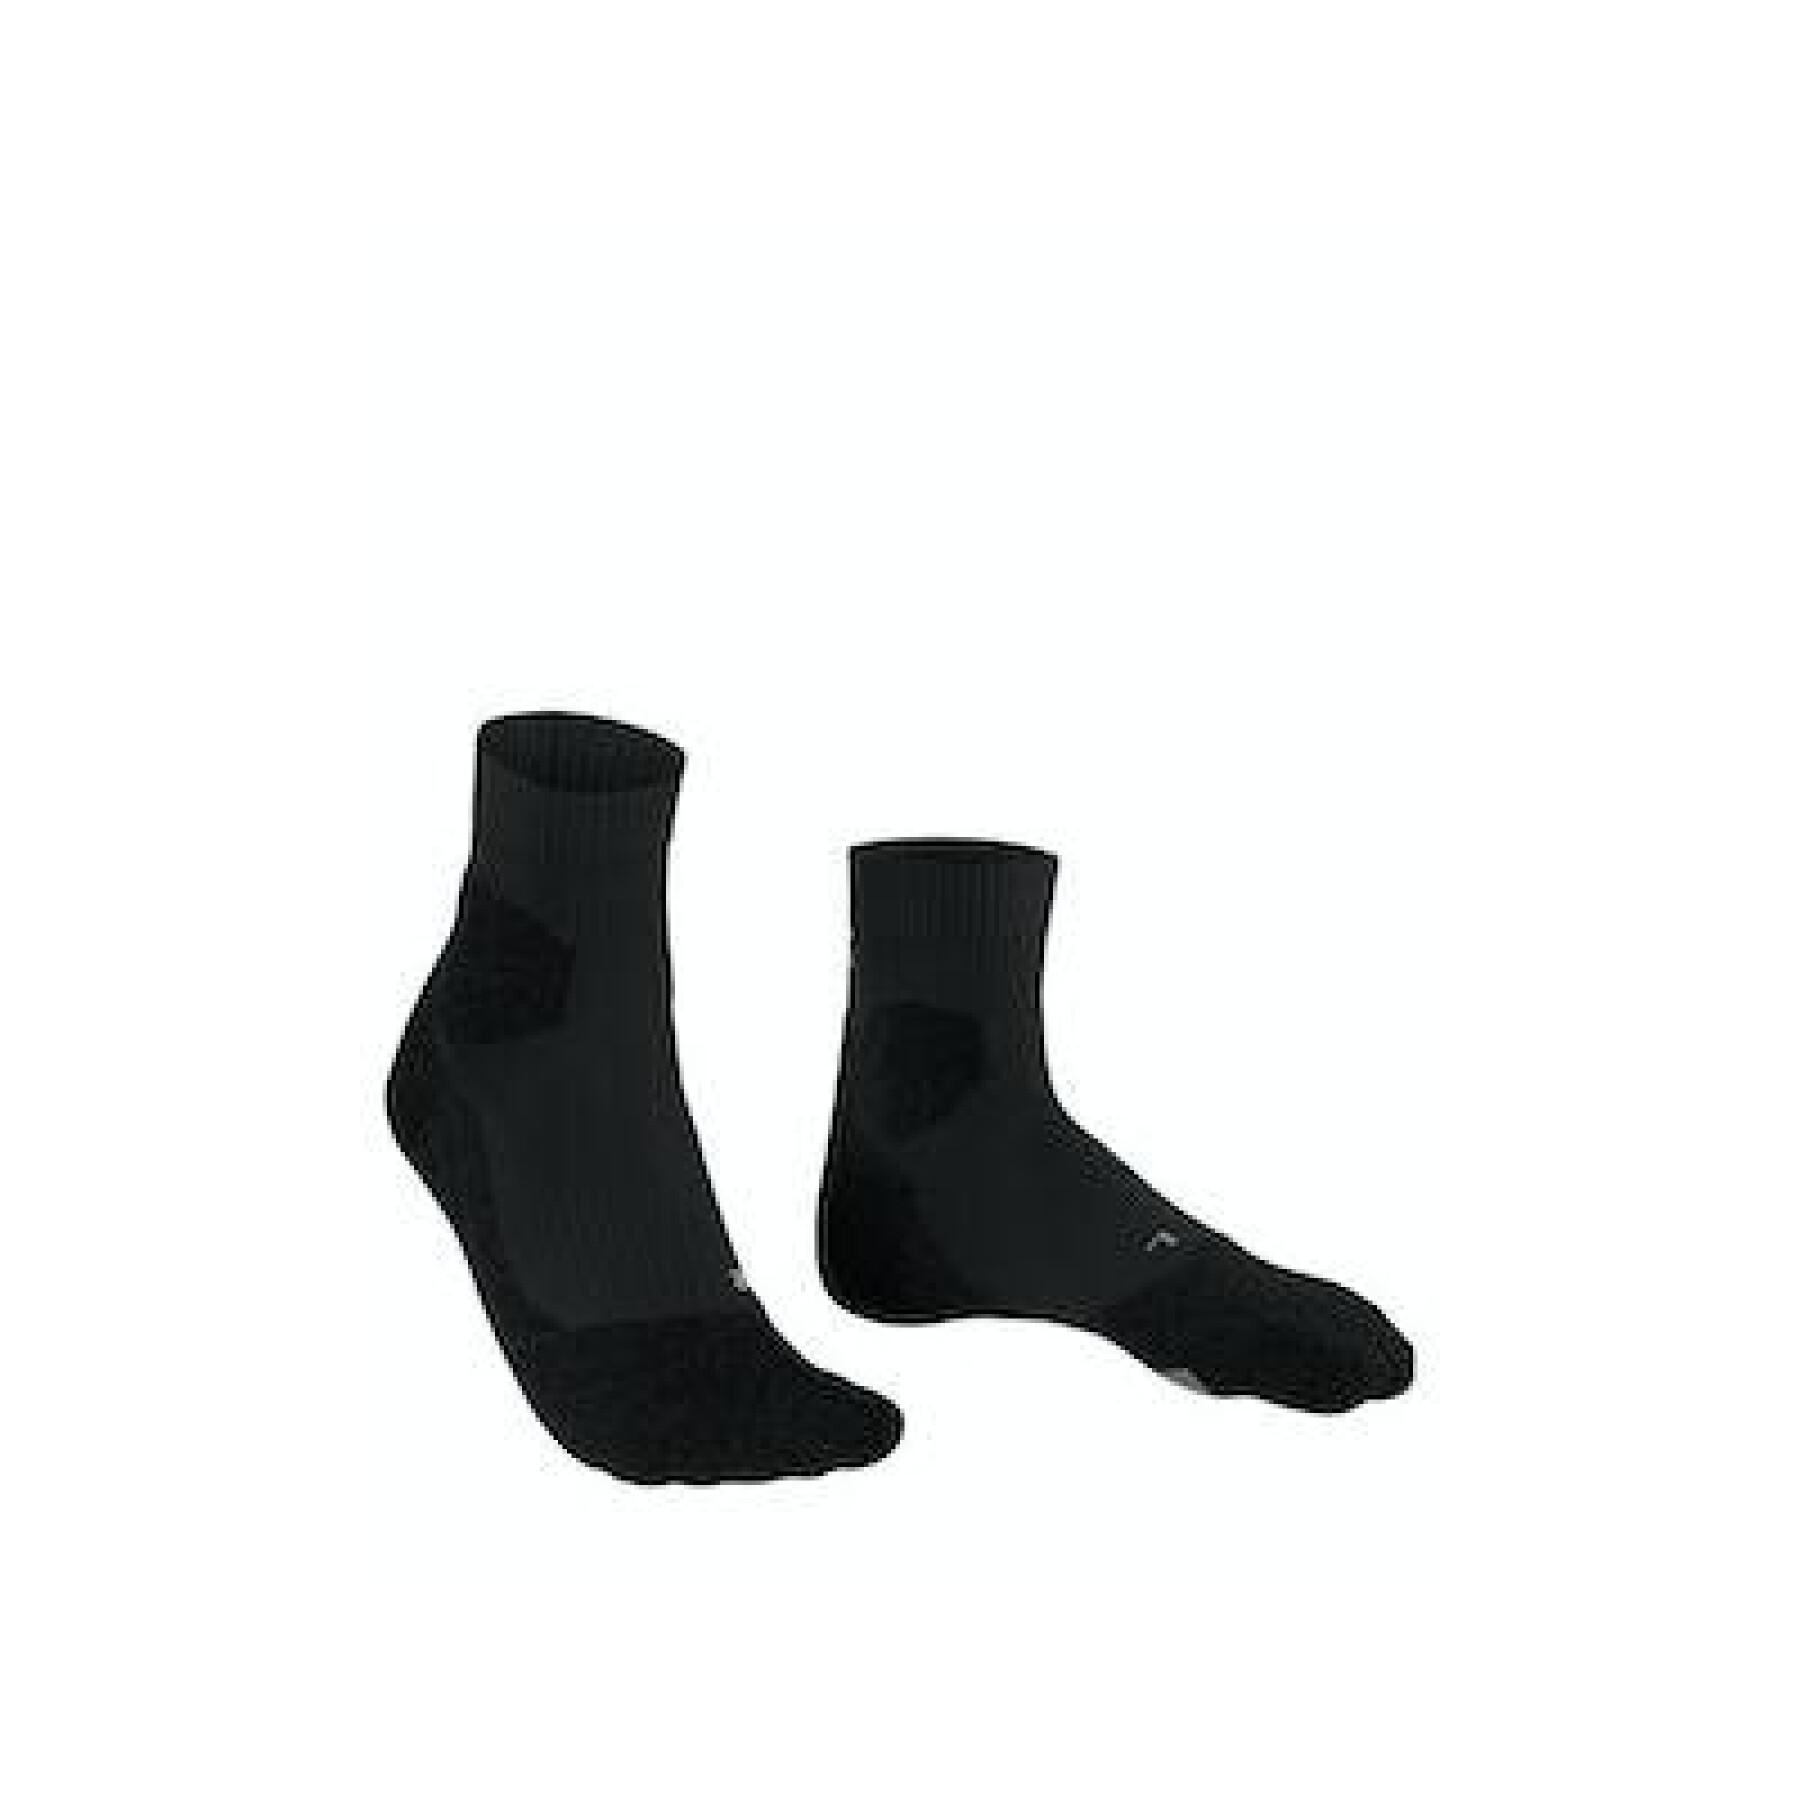 Buy Falke RU Trail Grip Running Socks Women Black online